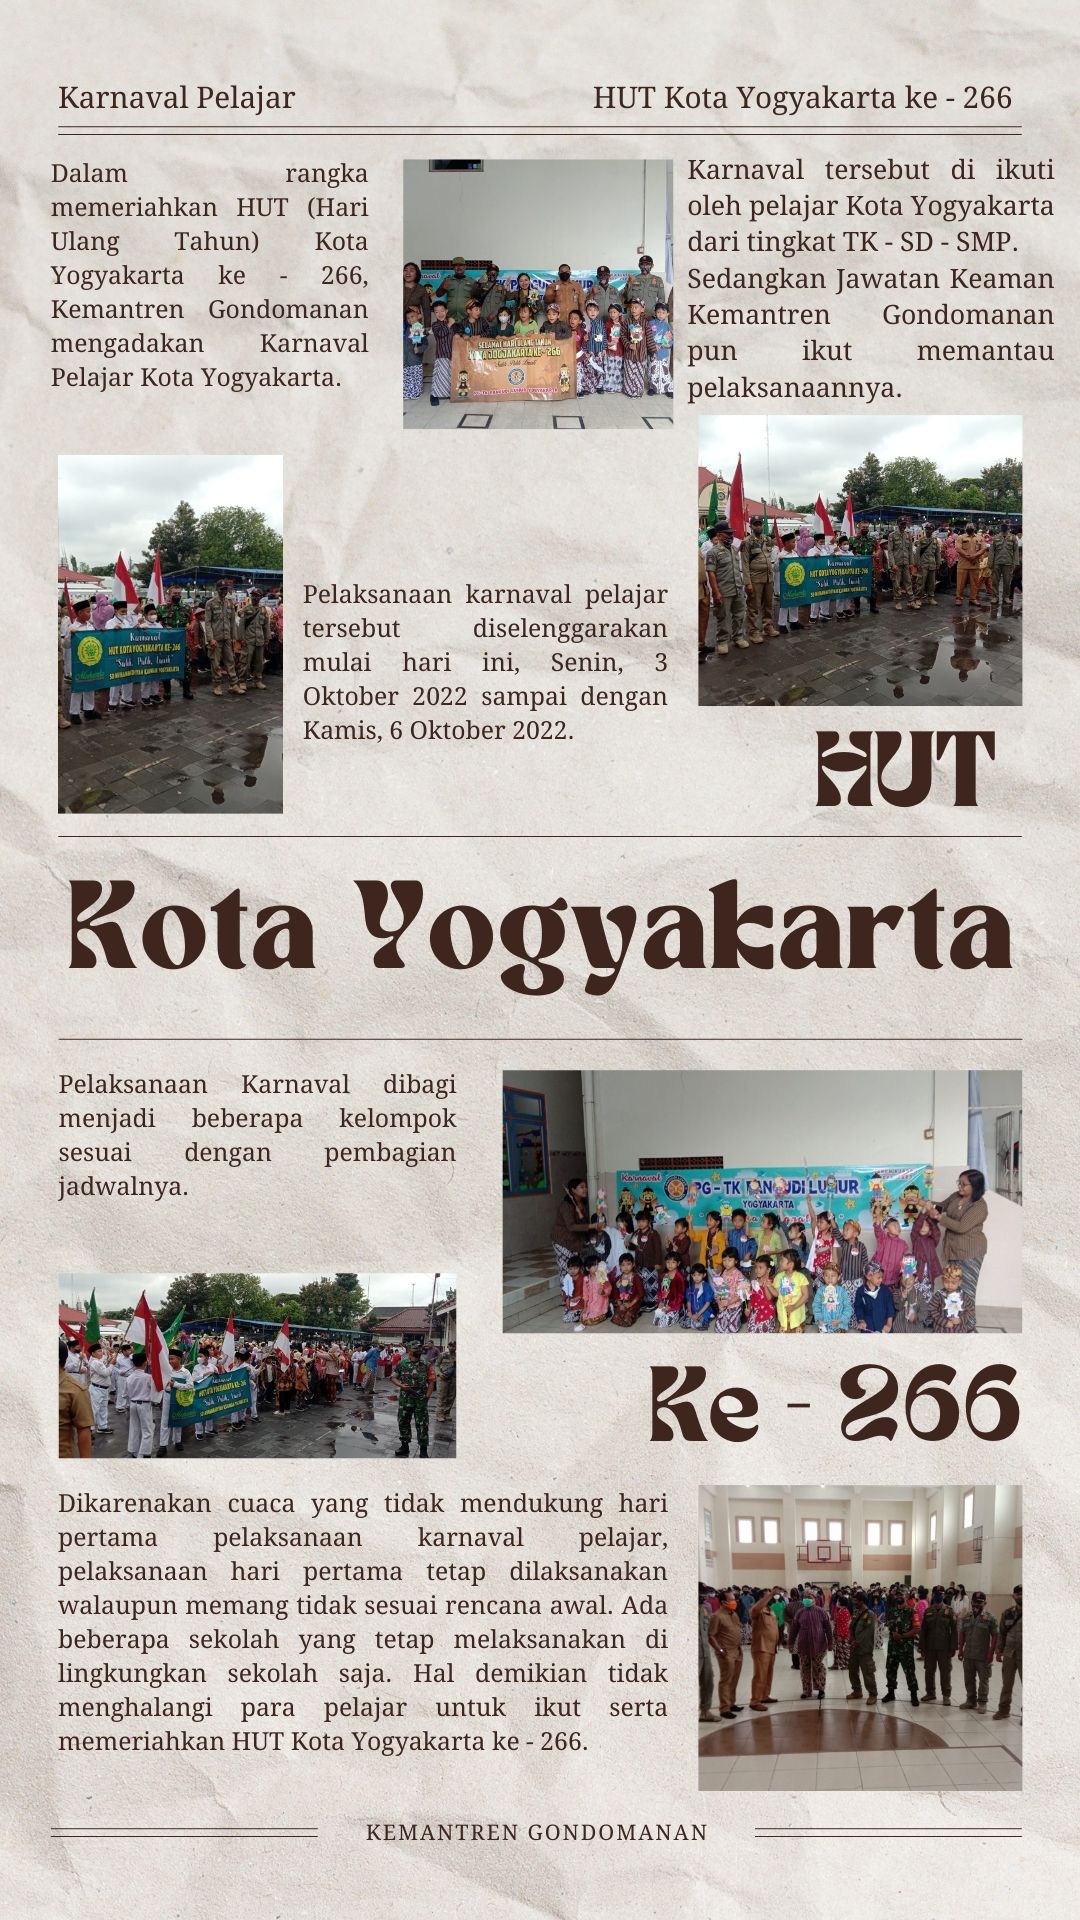 Pelajar Kemantren Gondomanan Meriahkan HUT Kota Yogyakarta ke - 266